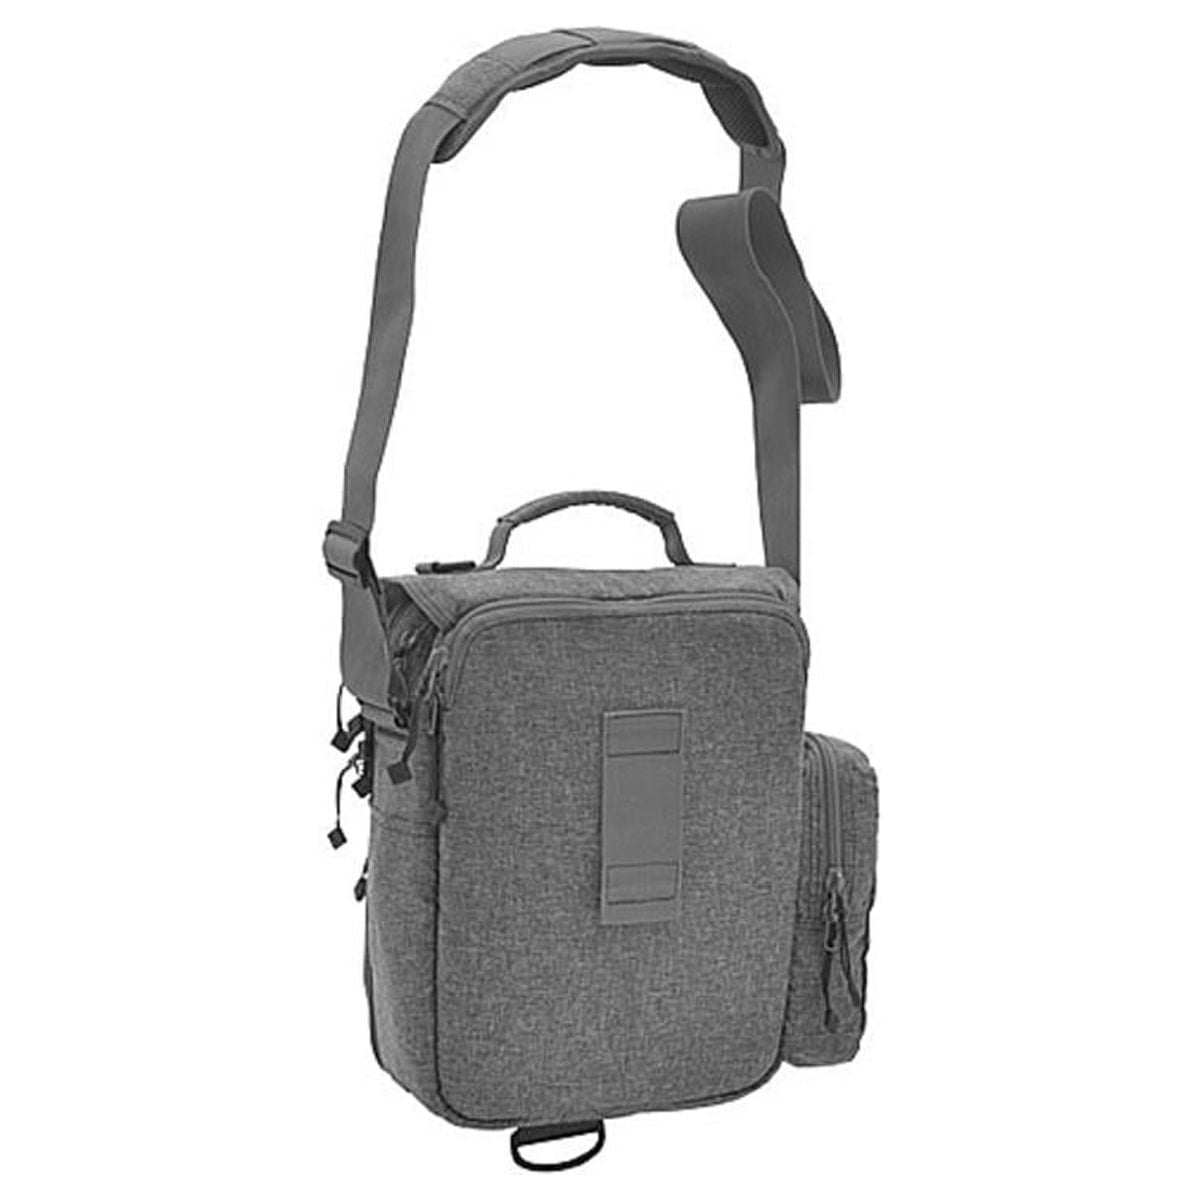 Hazard 4 Grayman Kato Urban EDC Shoulder Bag, Gray, One Size, 